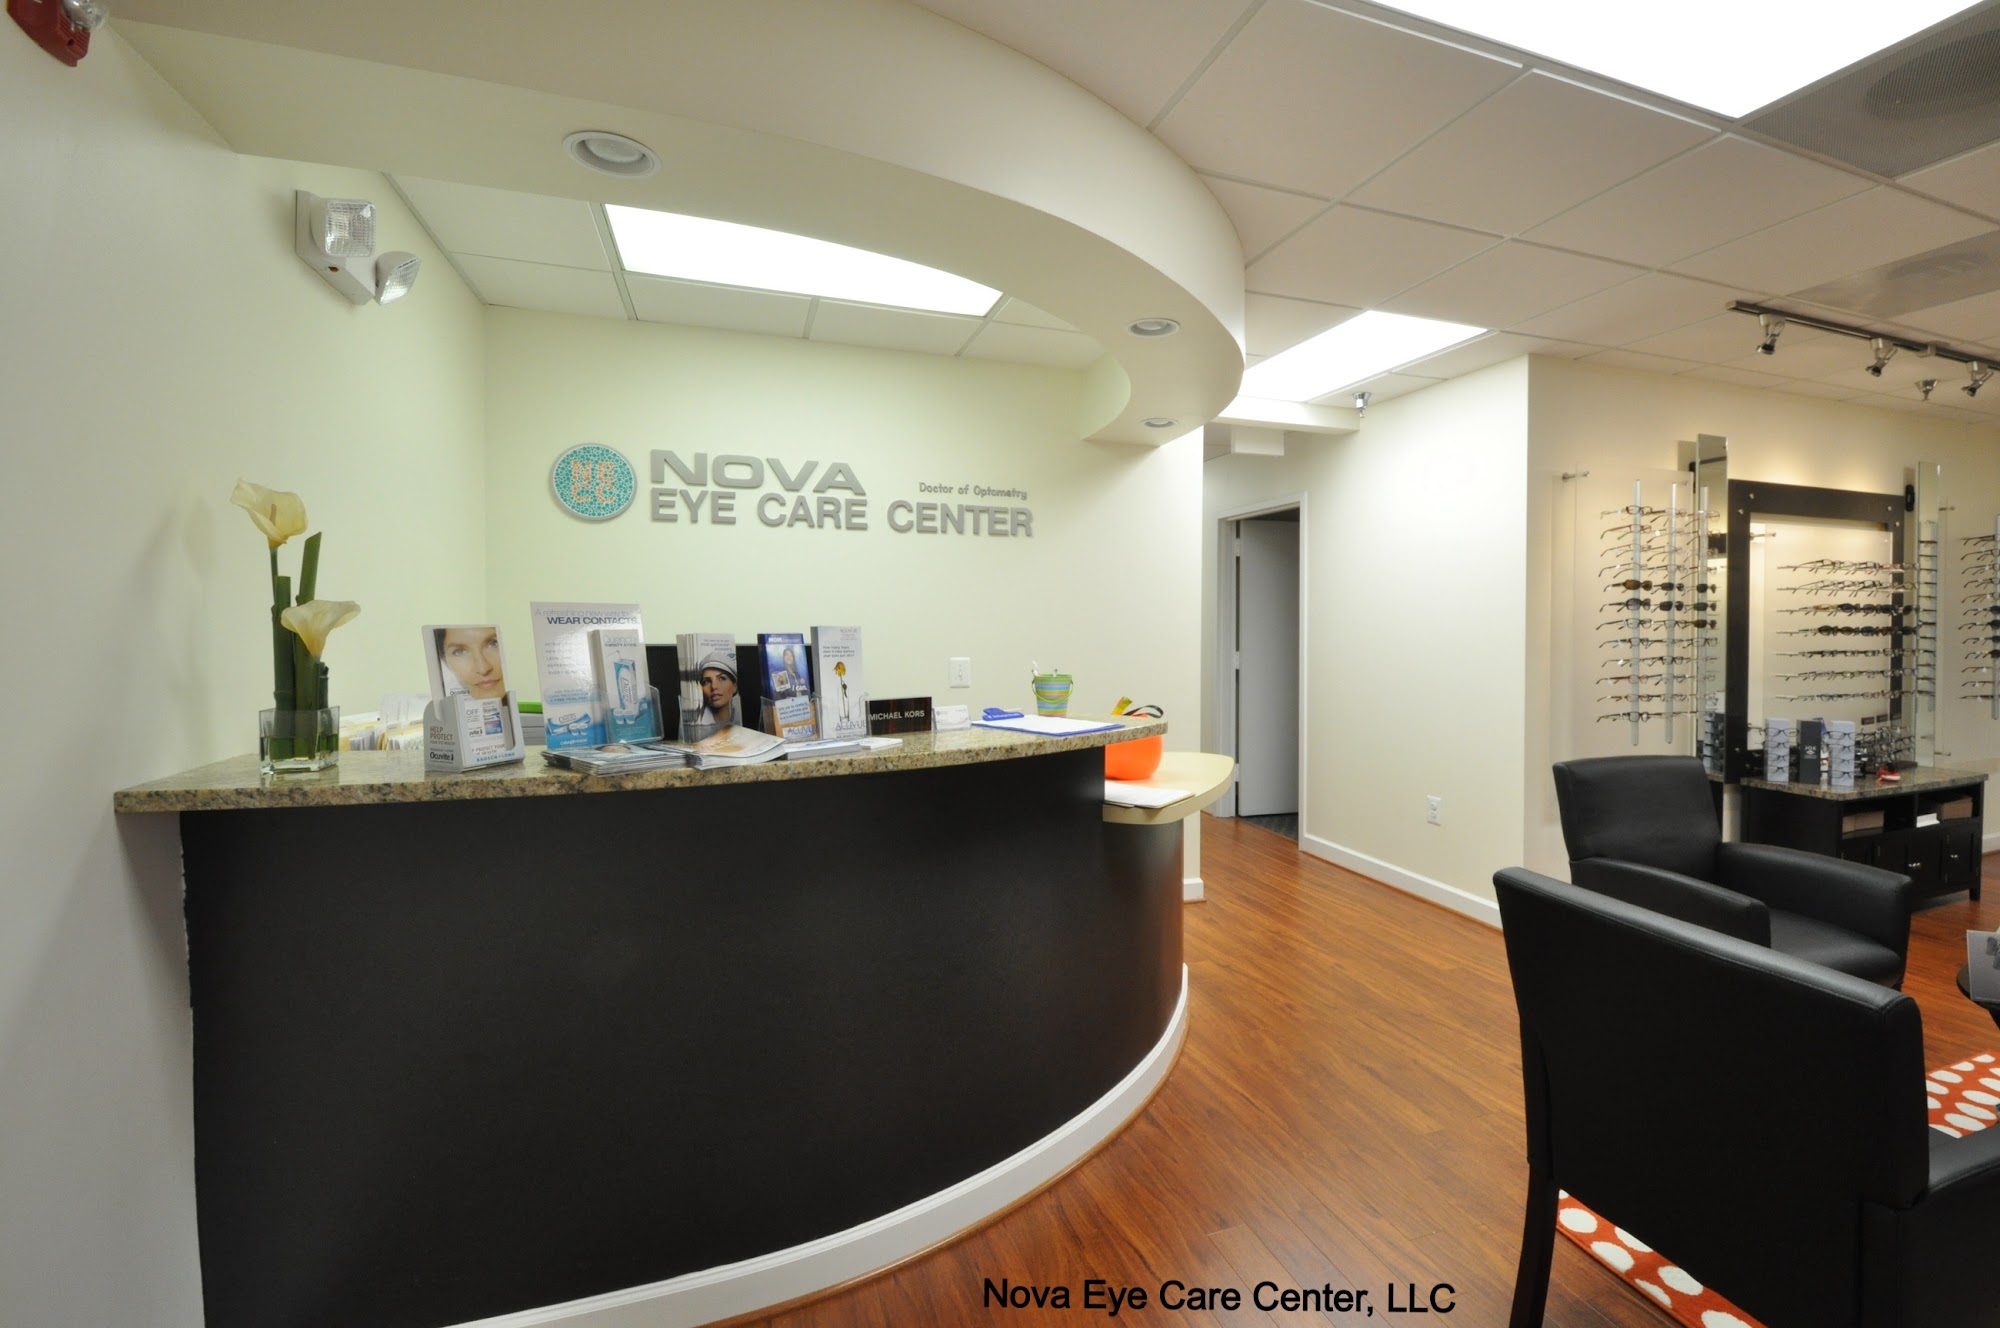 Nova Eye Care Center